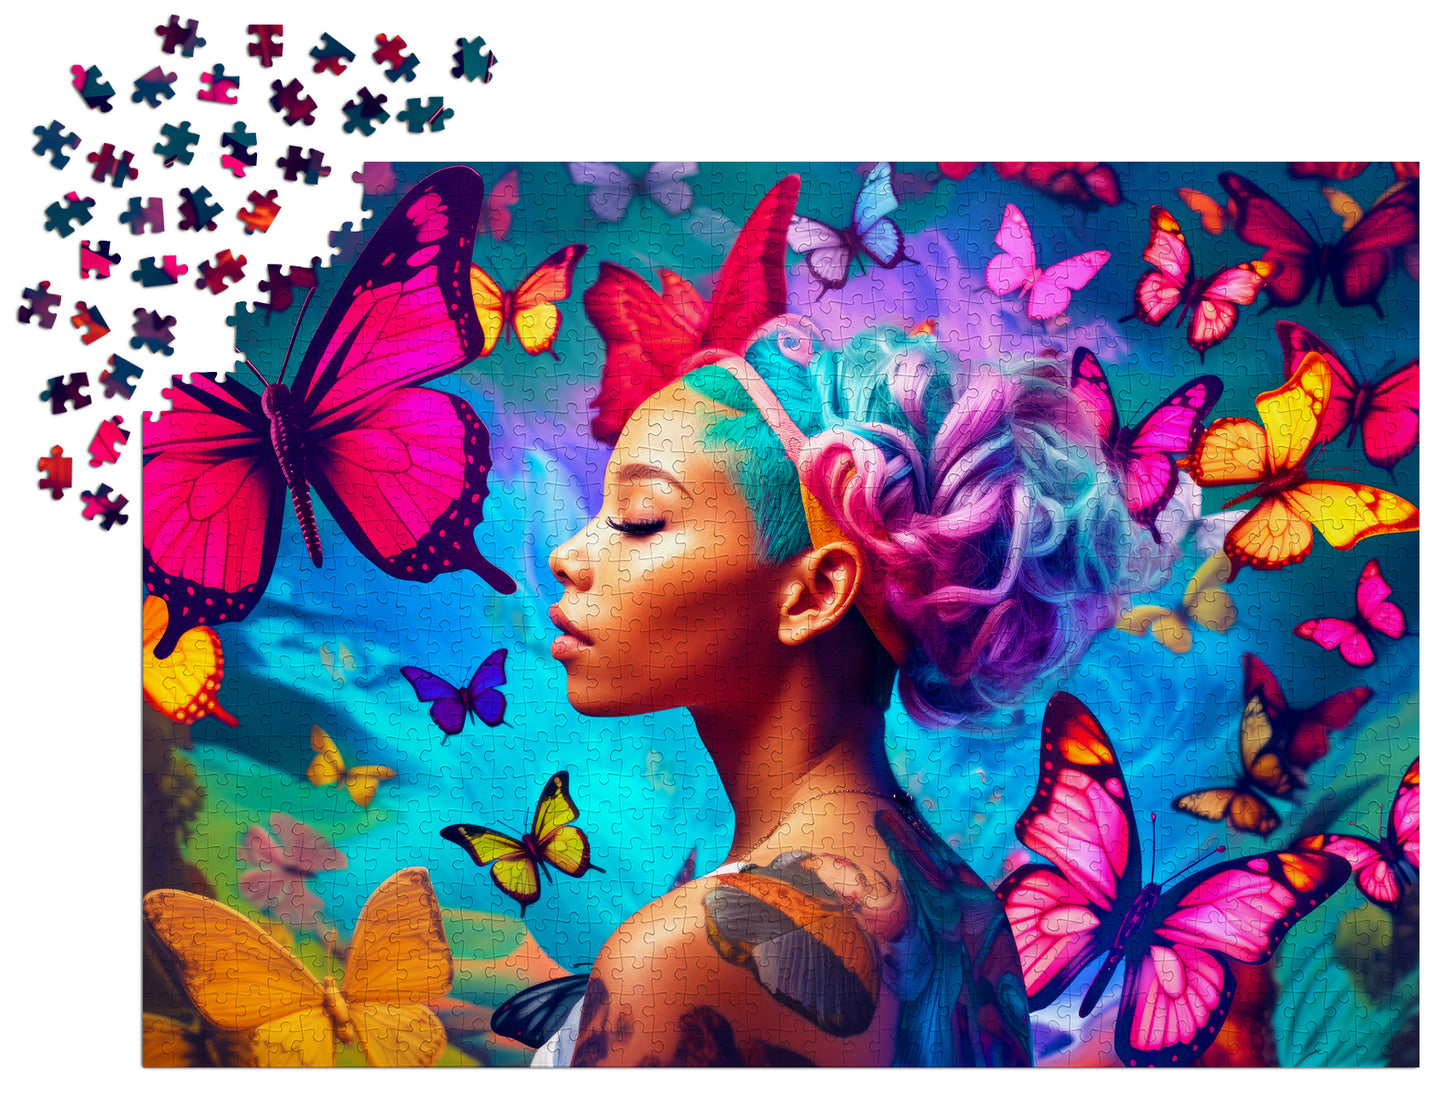 1000 Pieces Jigsaw Puzzle - Queen of Butterflies (2129)